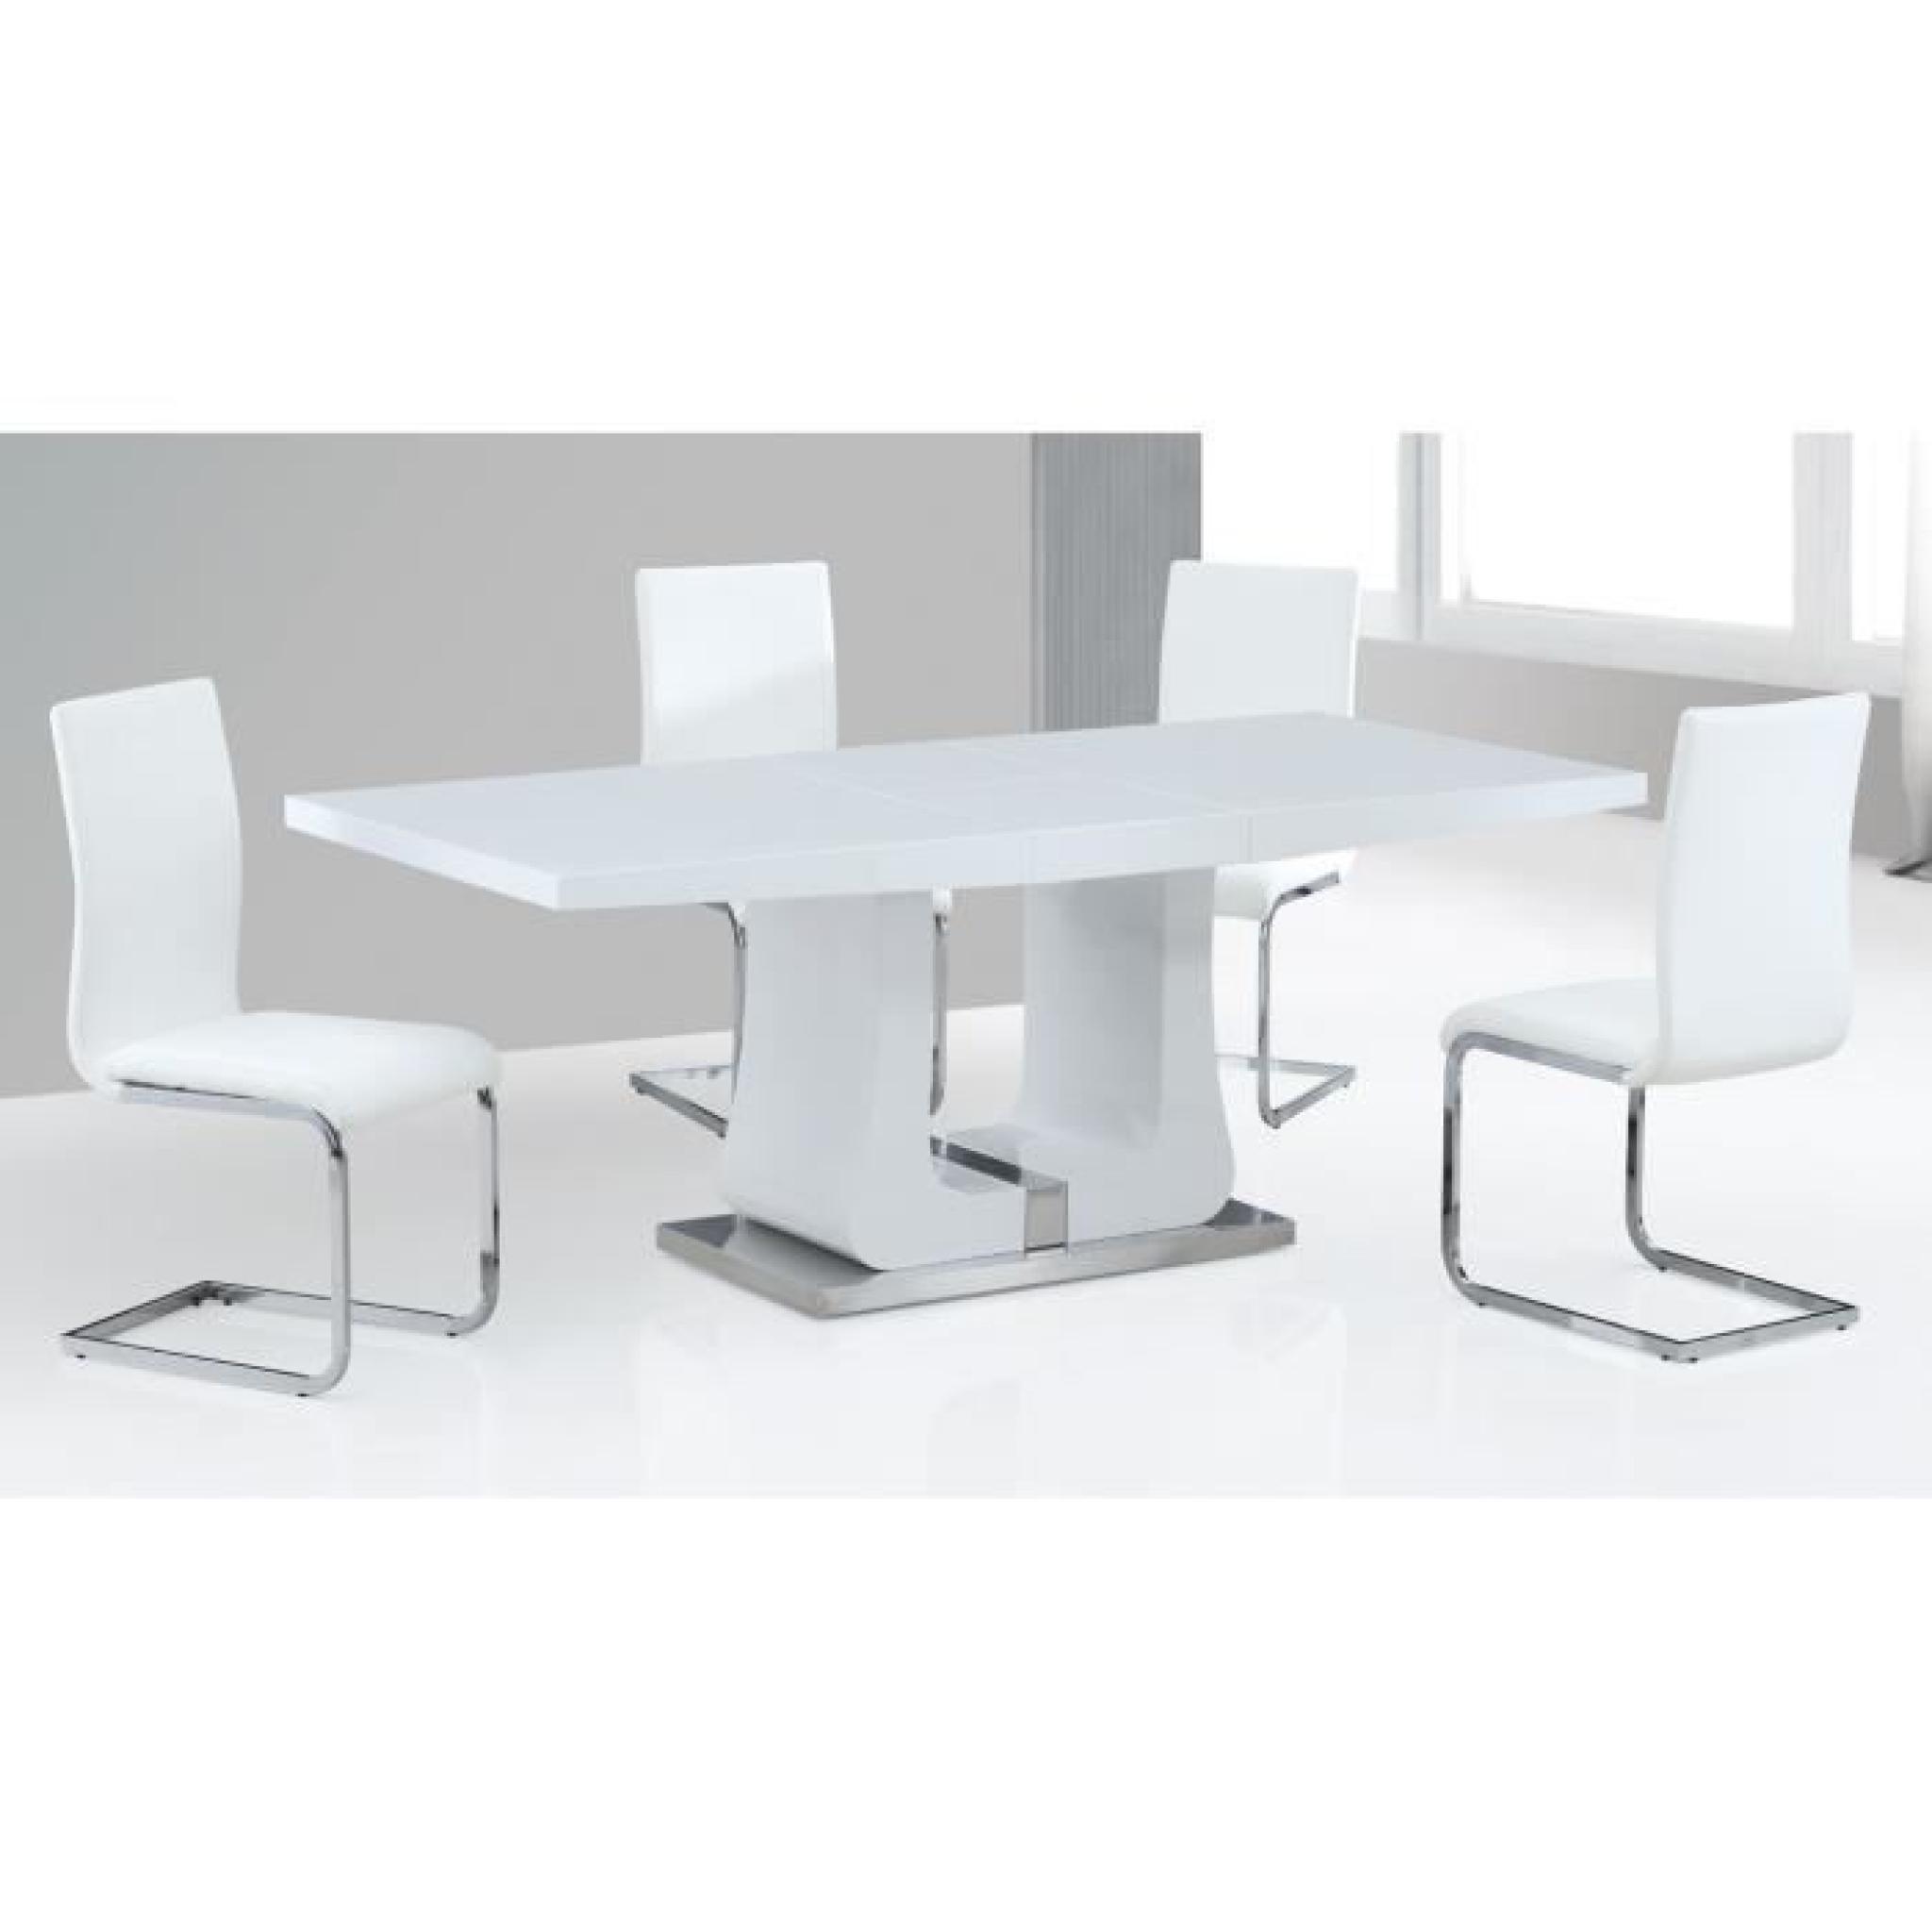 Table ultra design avec rallonge coloris blanc laqué